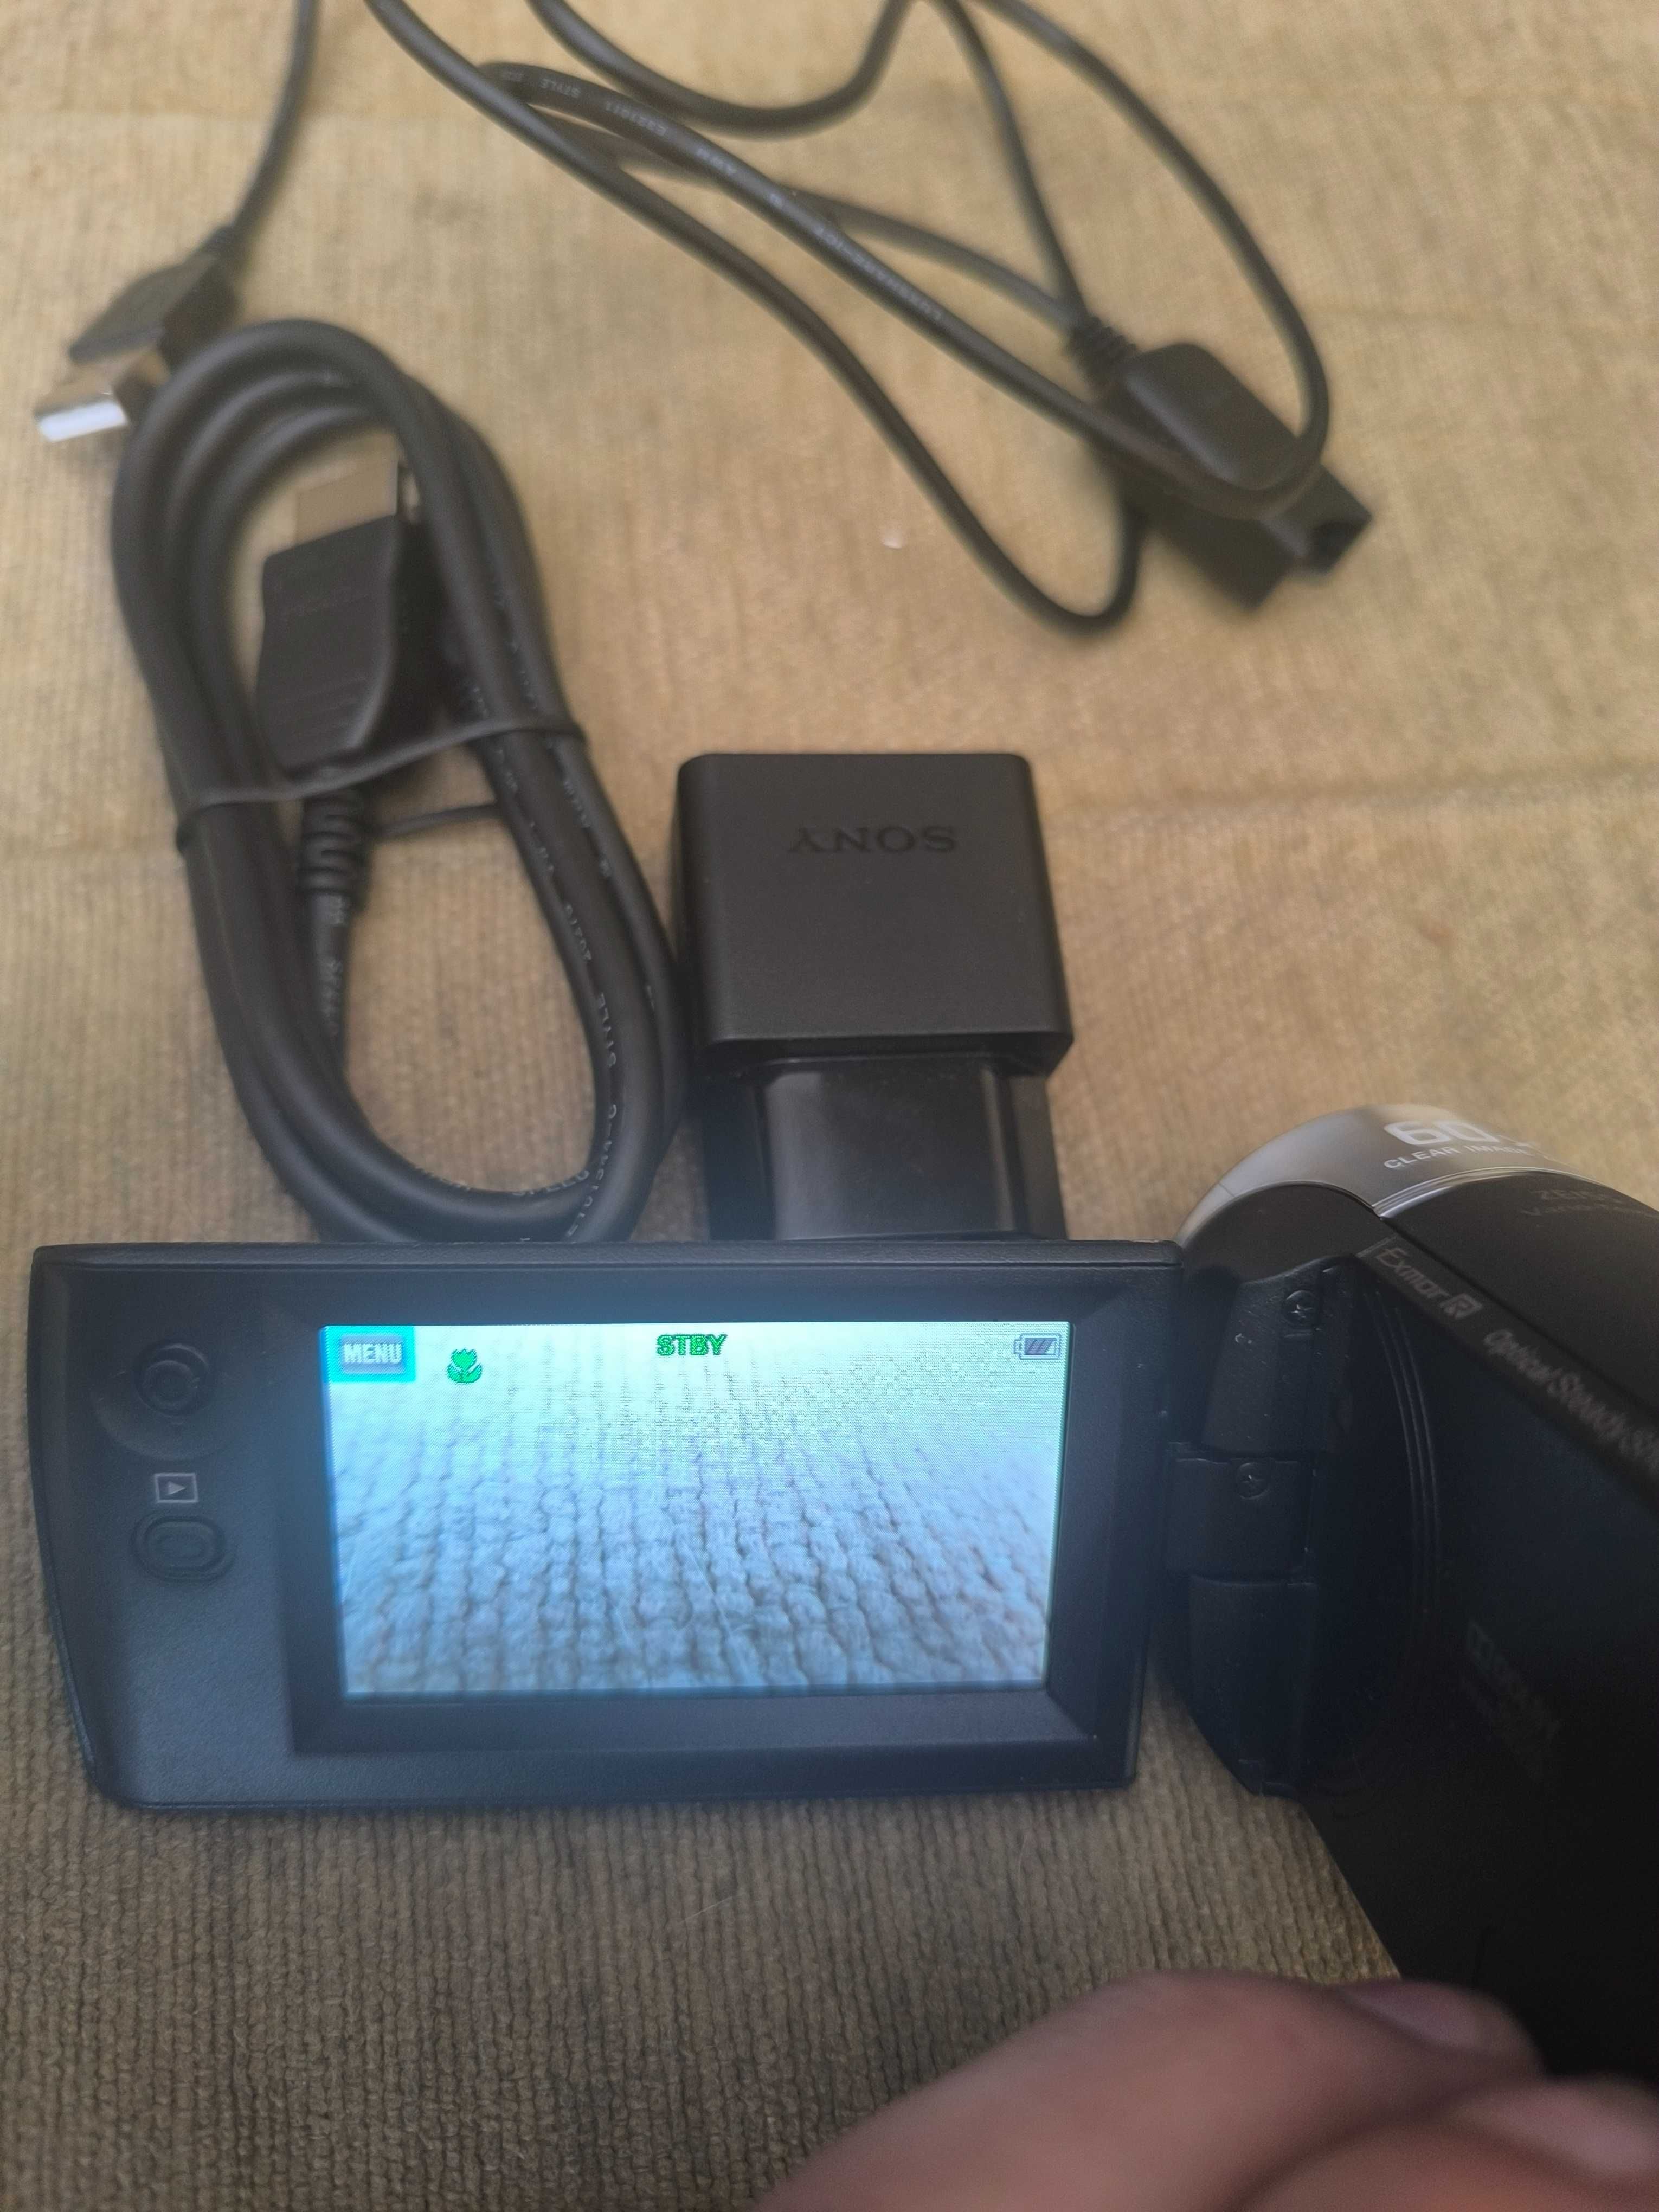 Видеокамера Sony CX405